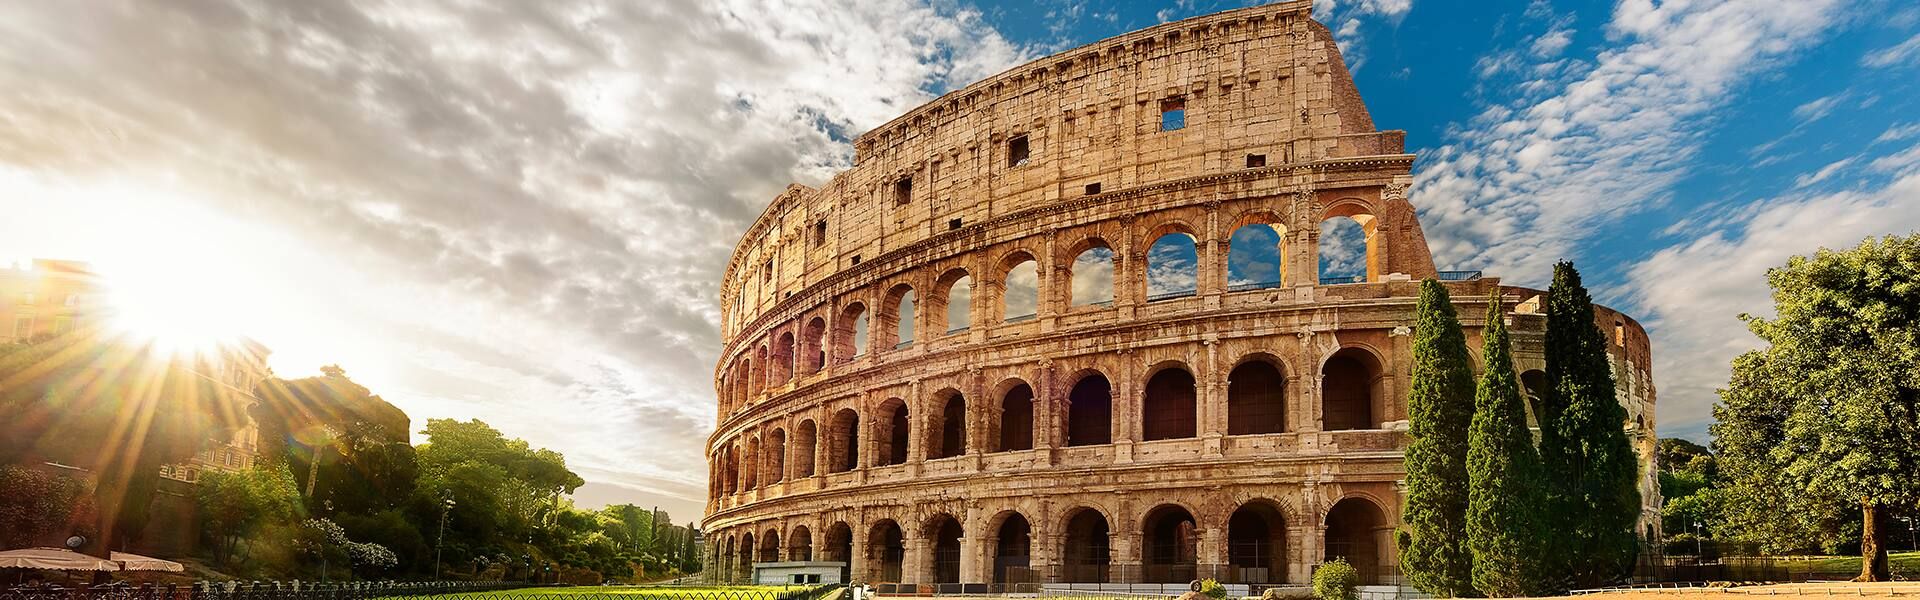 Colosseum, Rome Cruisetour